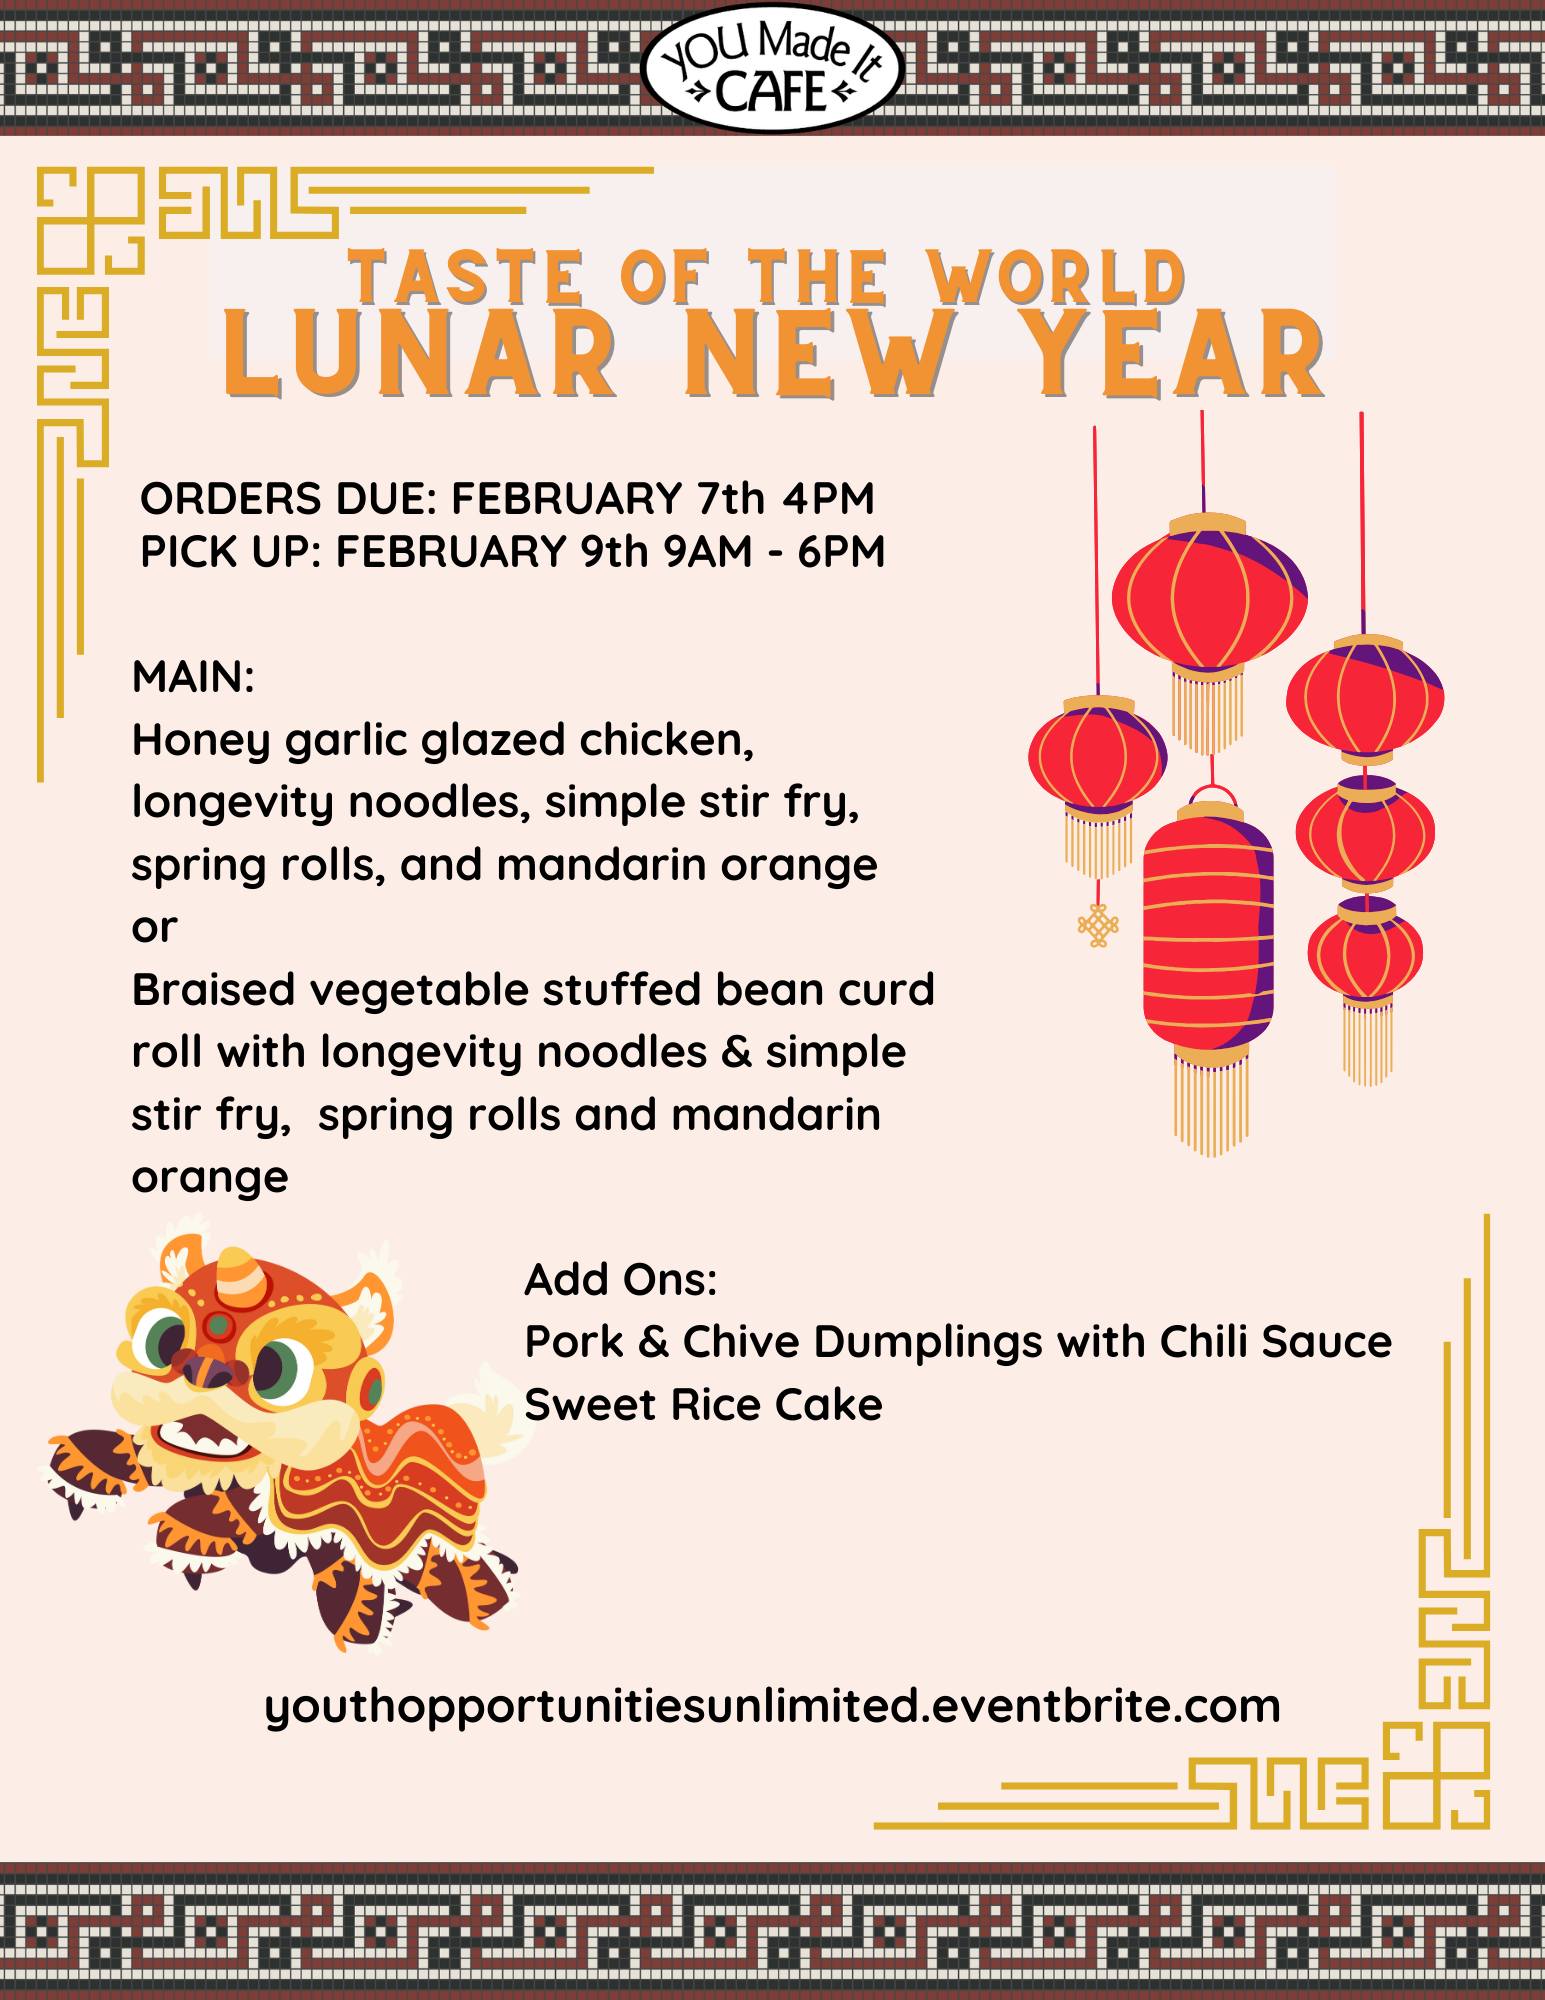 Taste of the World - Lunar New Year